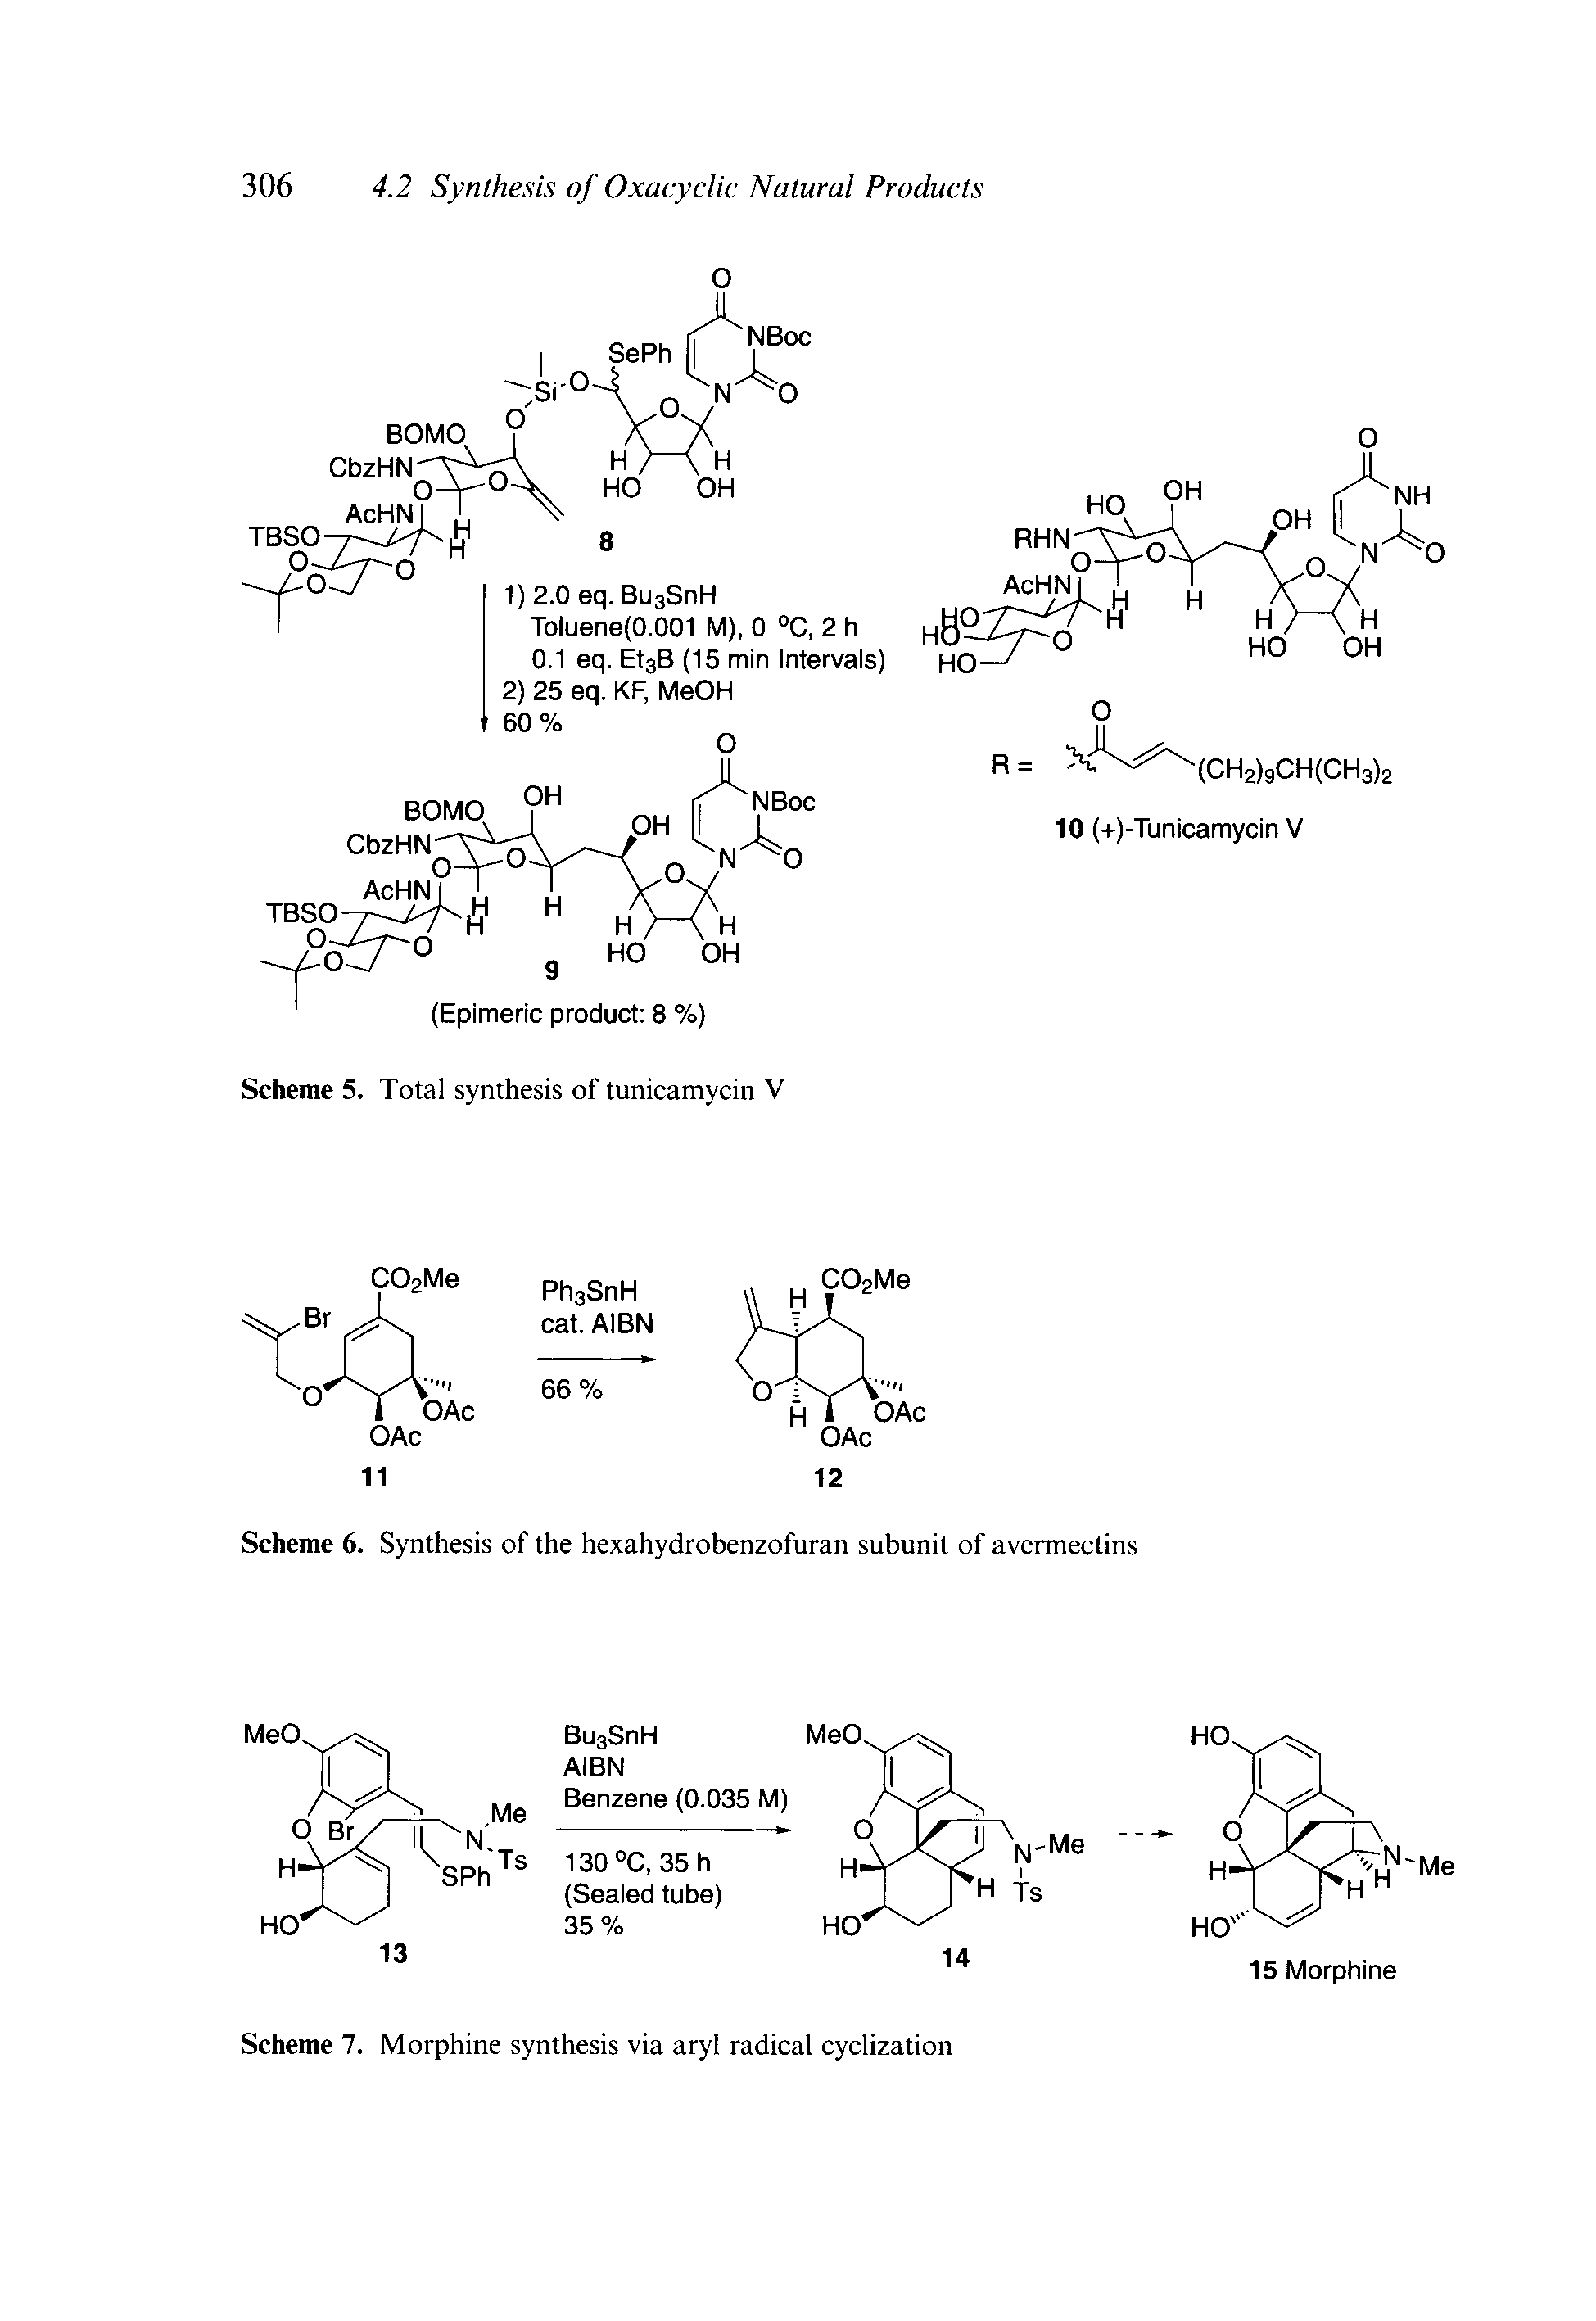 Scheme 7. Morphine synthesis via aryl radical cyclization...